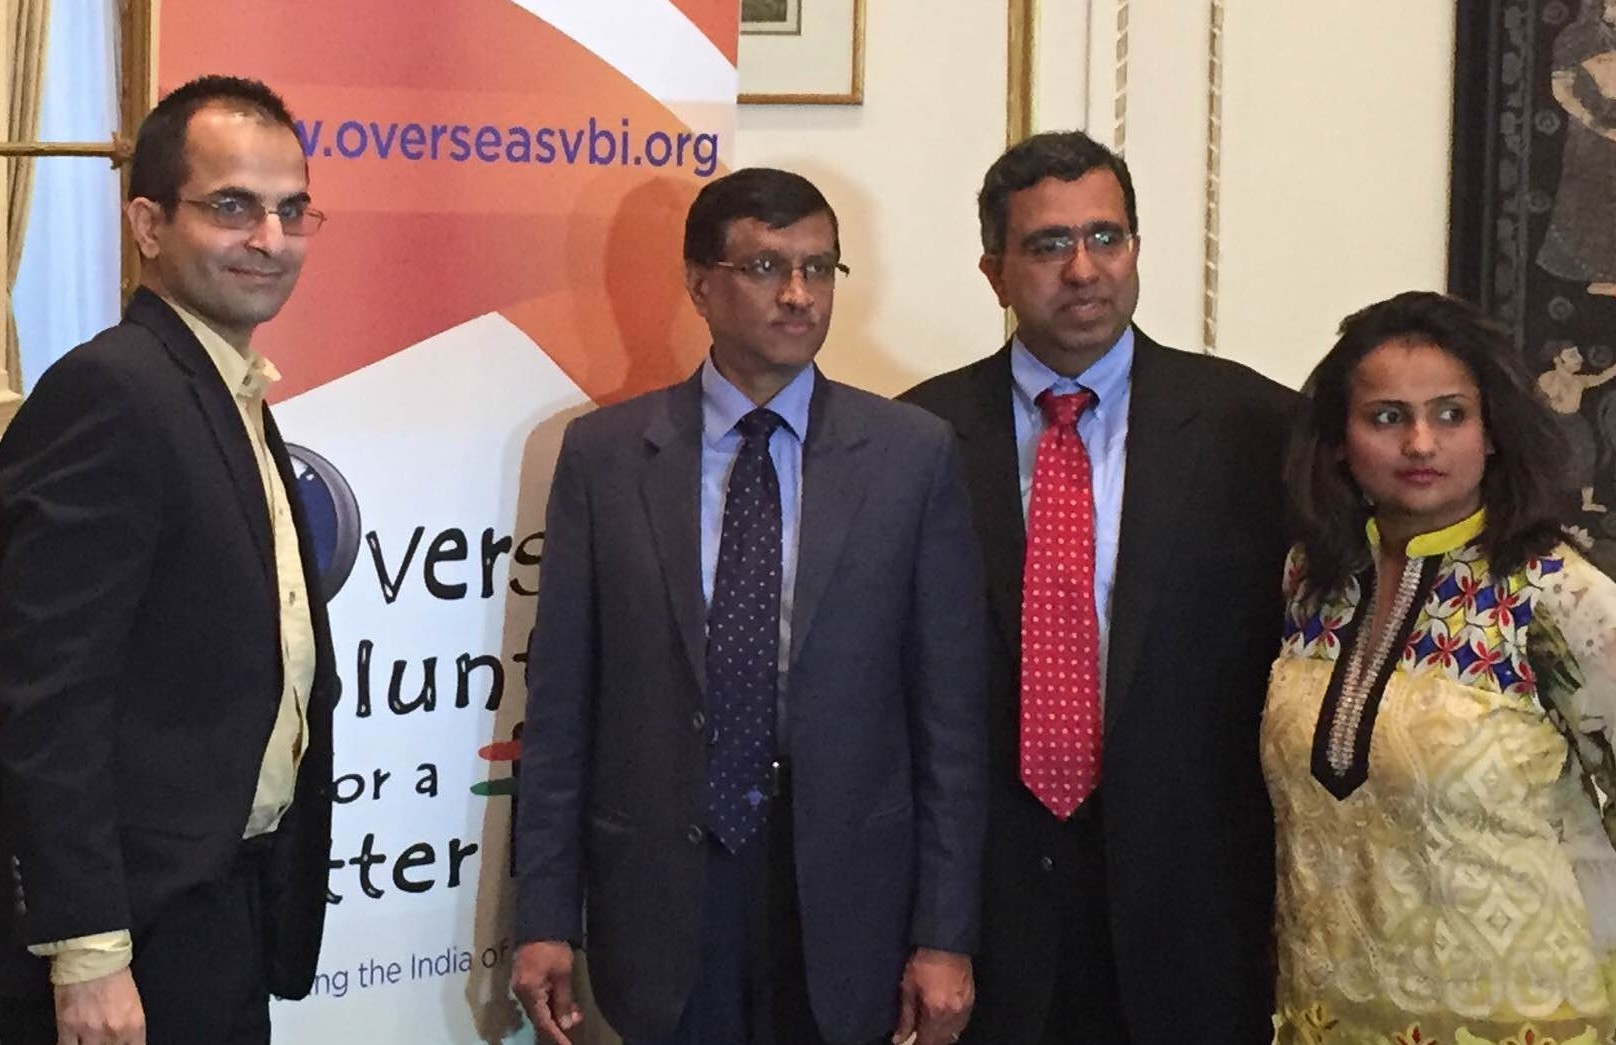 At the launch of OVBI website at the Indian Consulate in New York, April 28. From L to R: Anil Sharma, OVBI Board Member, Consul General Dnyaneshwar Mulay, Suresh Vasu, President OVBI , Drumi Bhatt, OVBI Member - TIP Photo